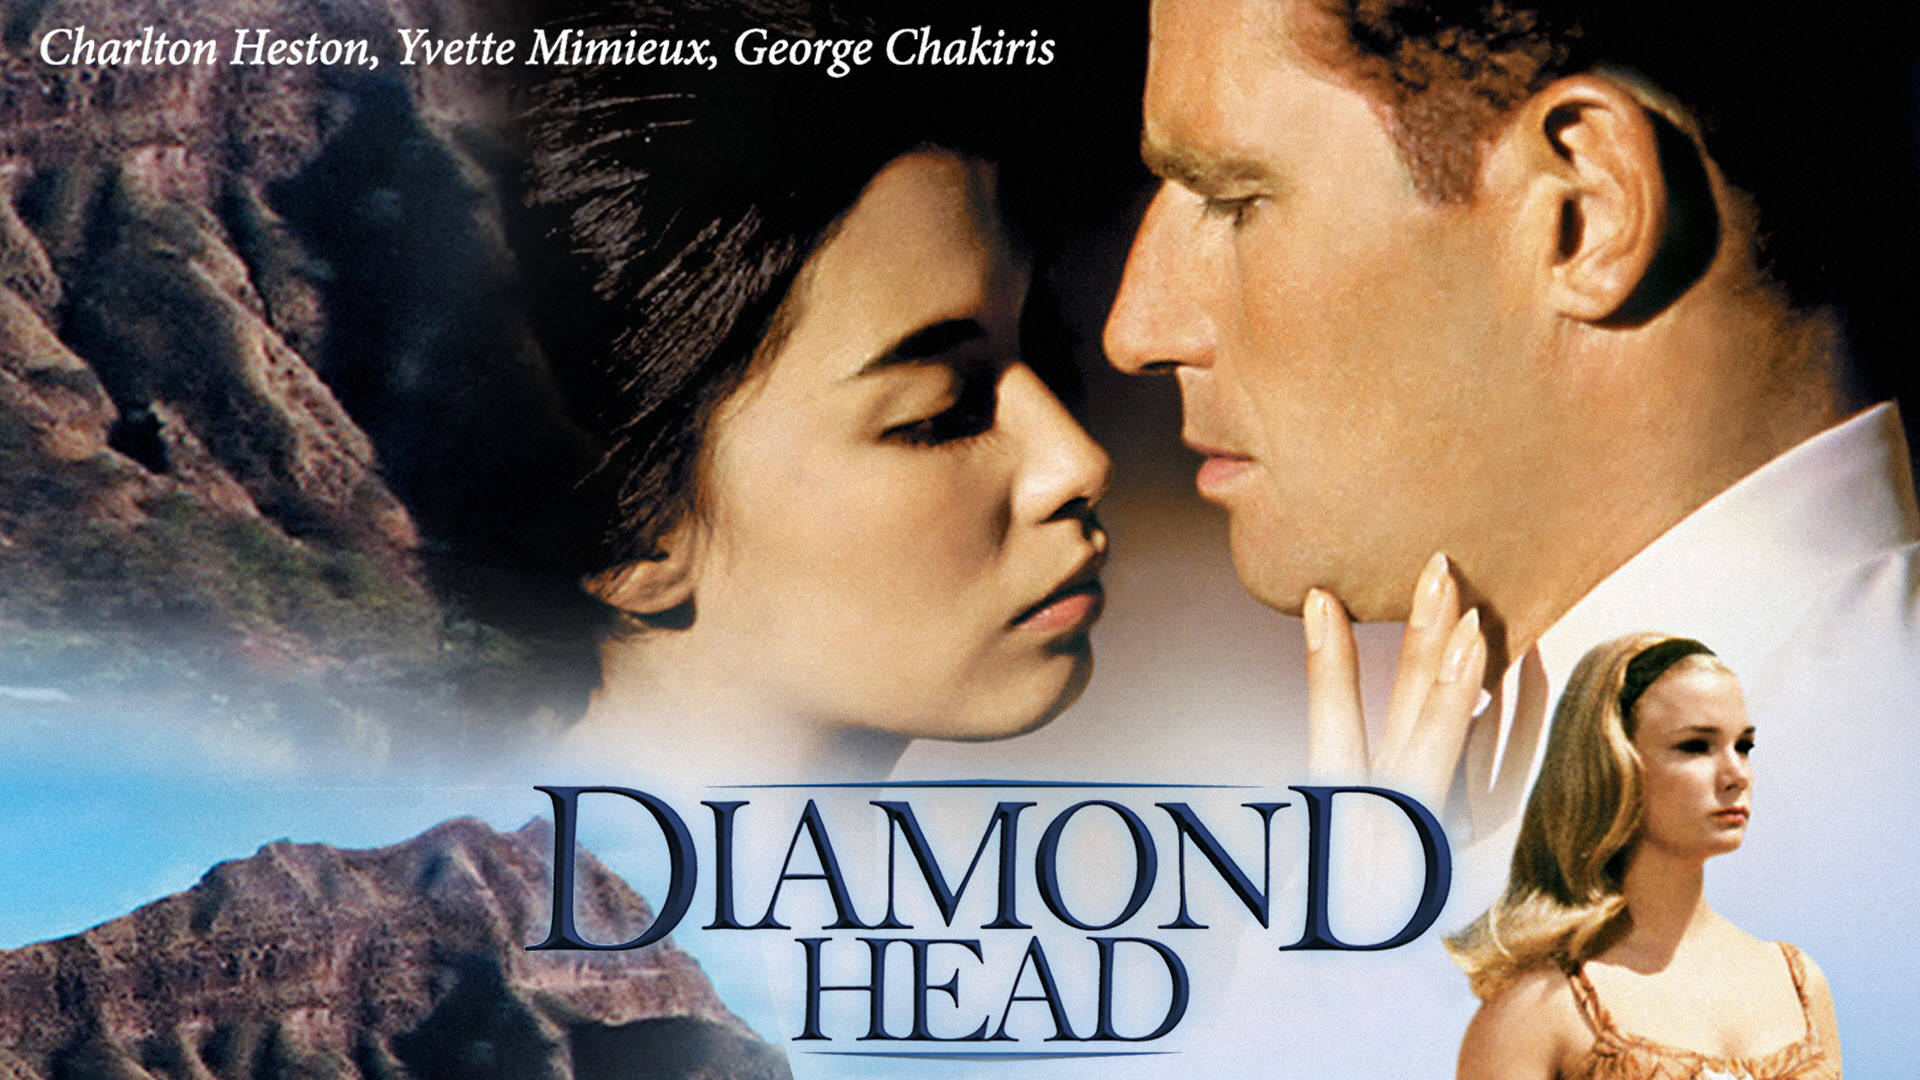 George Chakiris Diamant Head Movie Plakat Wallpaper